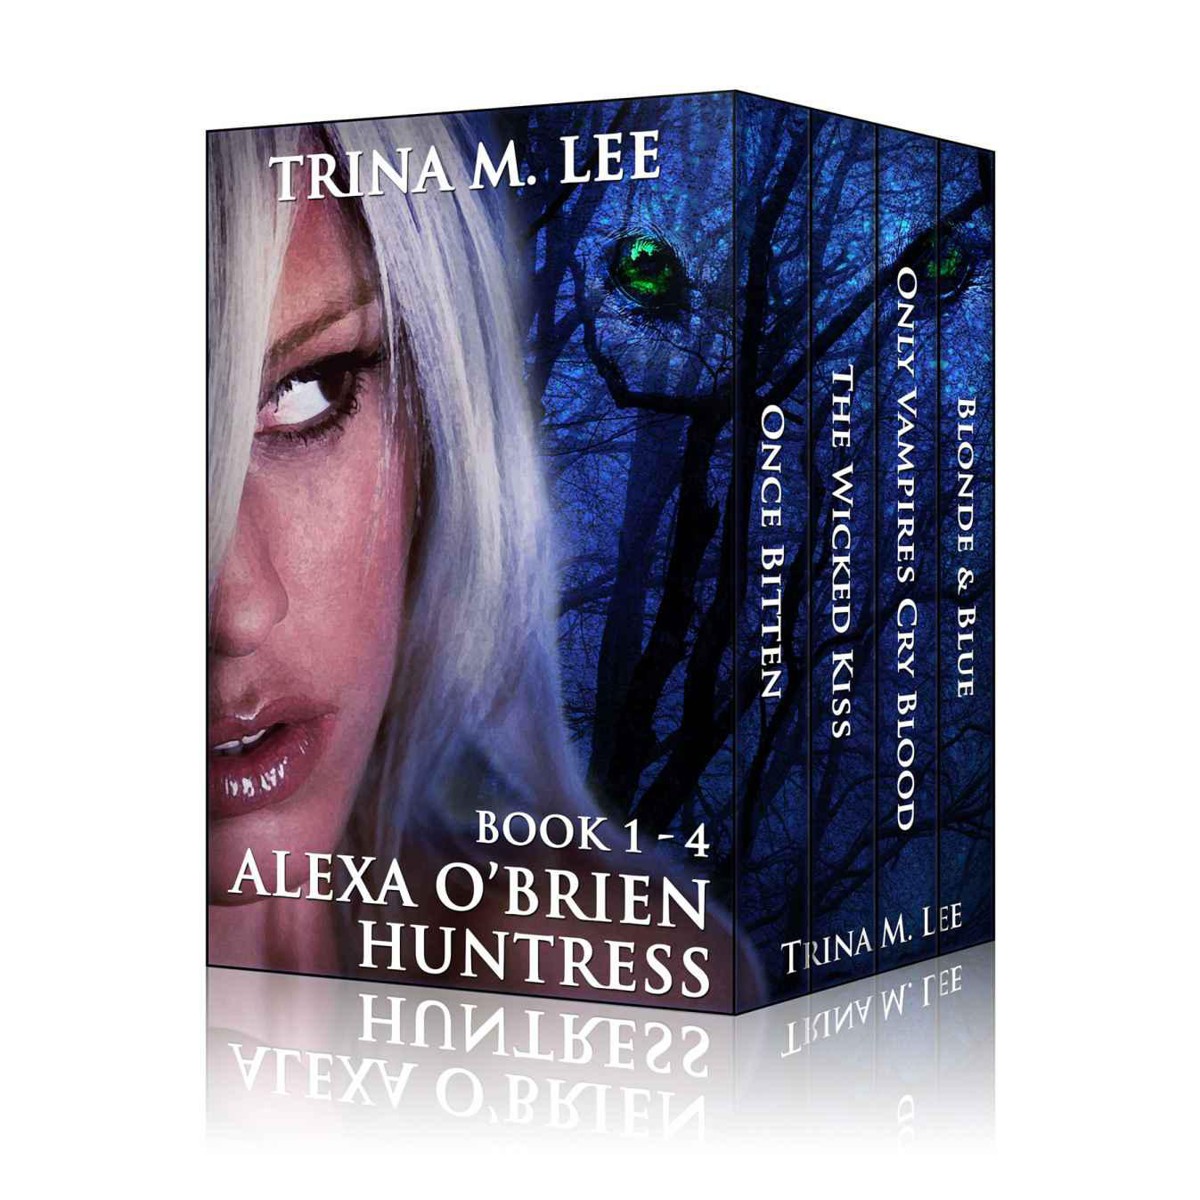 Alexa O'Brien Huntress Books 1-4 Box Set by Trina M. Lee